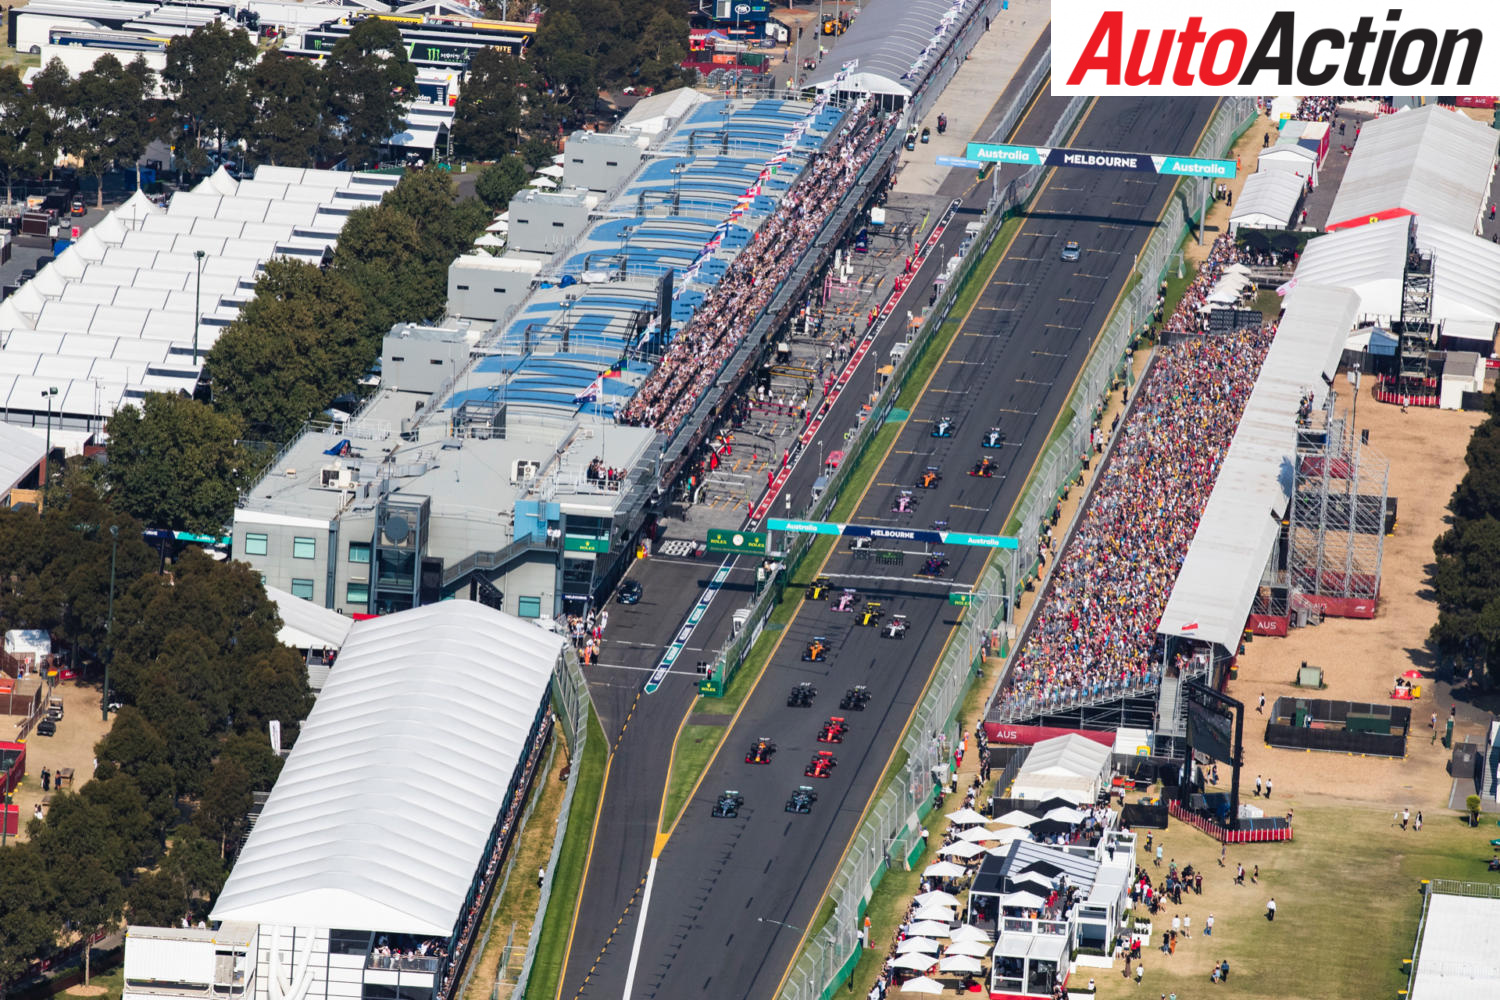 New title sponsor for Australian Grand Prix - Image: Motorsport Images